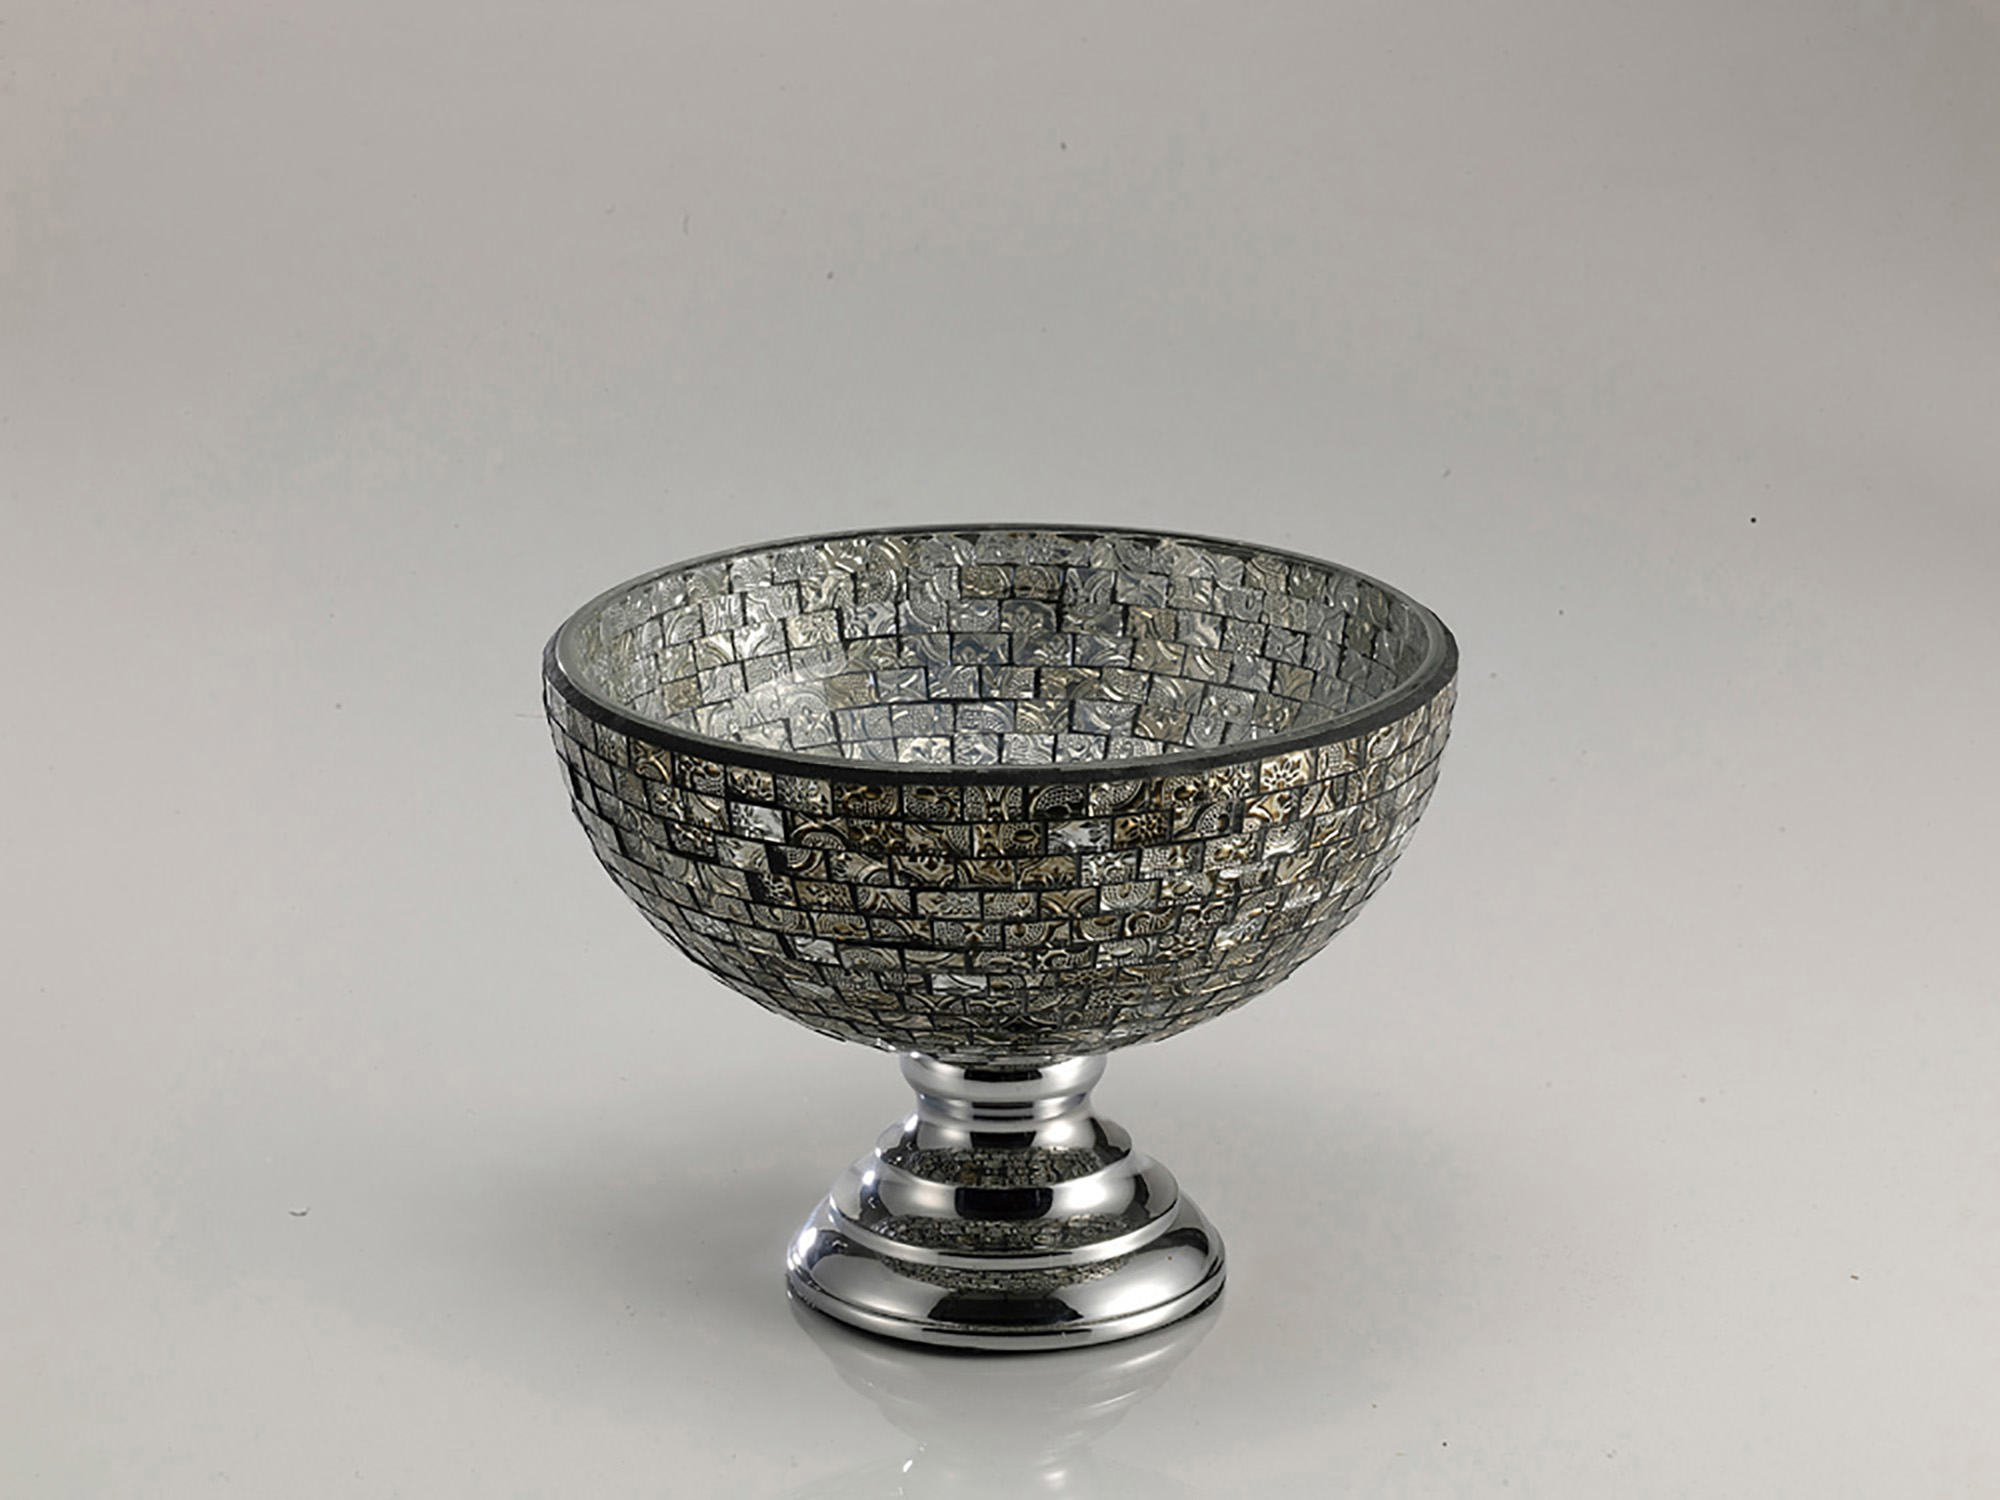 Celeste Mosaic Art Glassware Diyas Home Vases